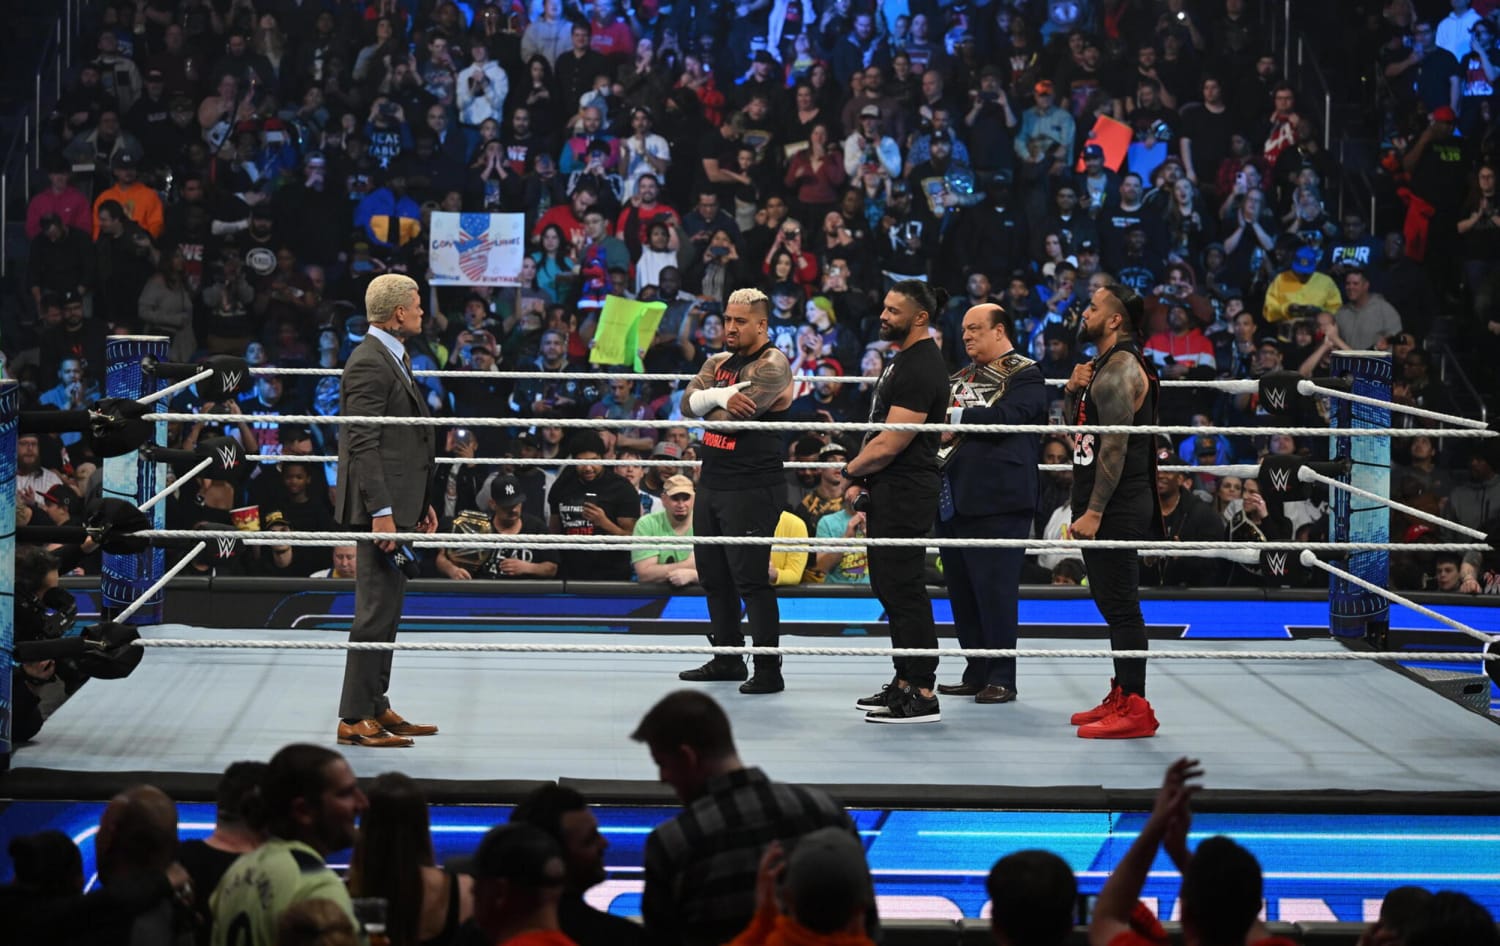 Six-Woman Tag Team Match Set For WWE WrestleMania 39